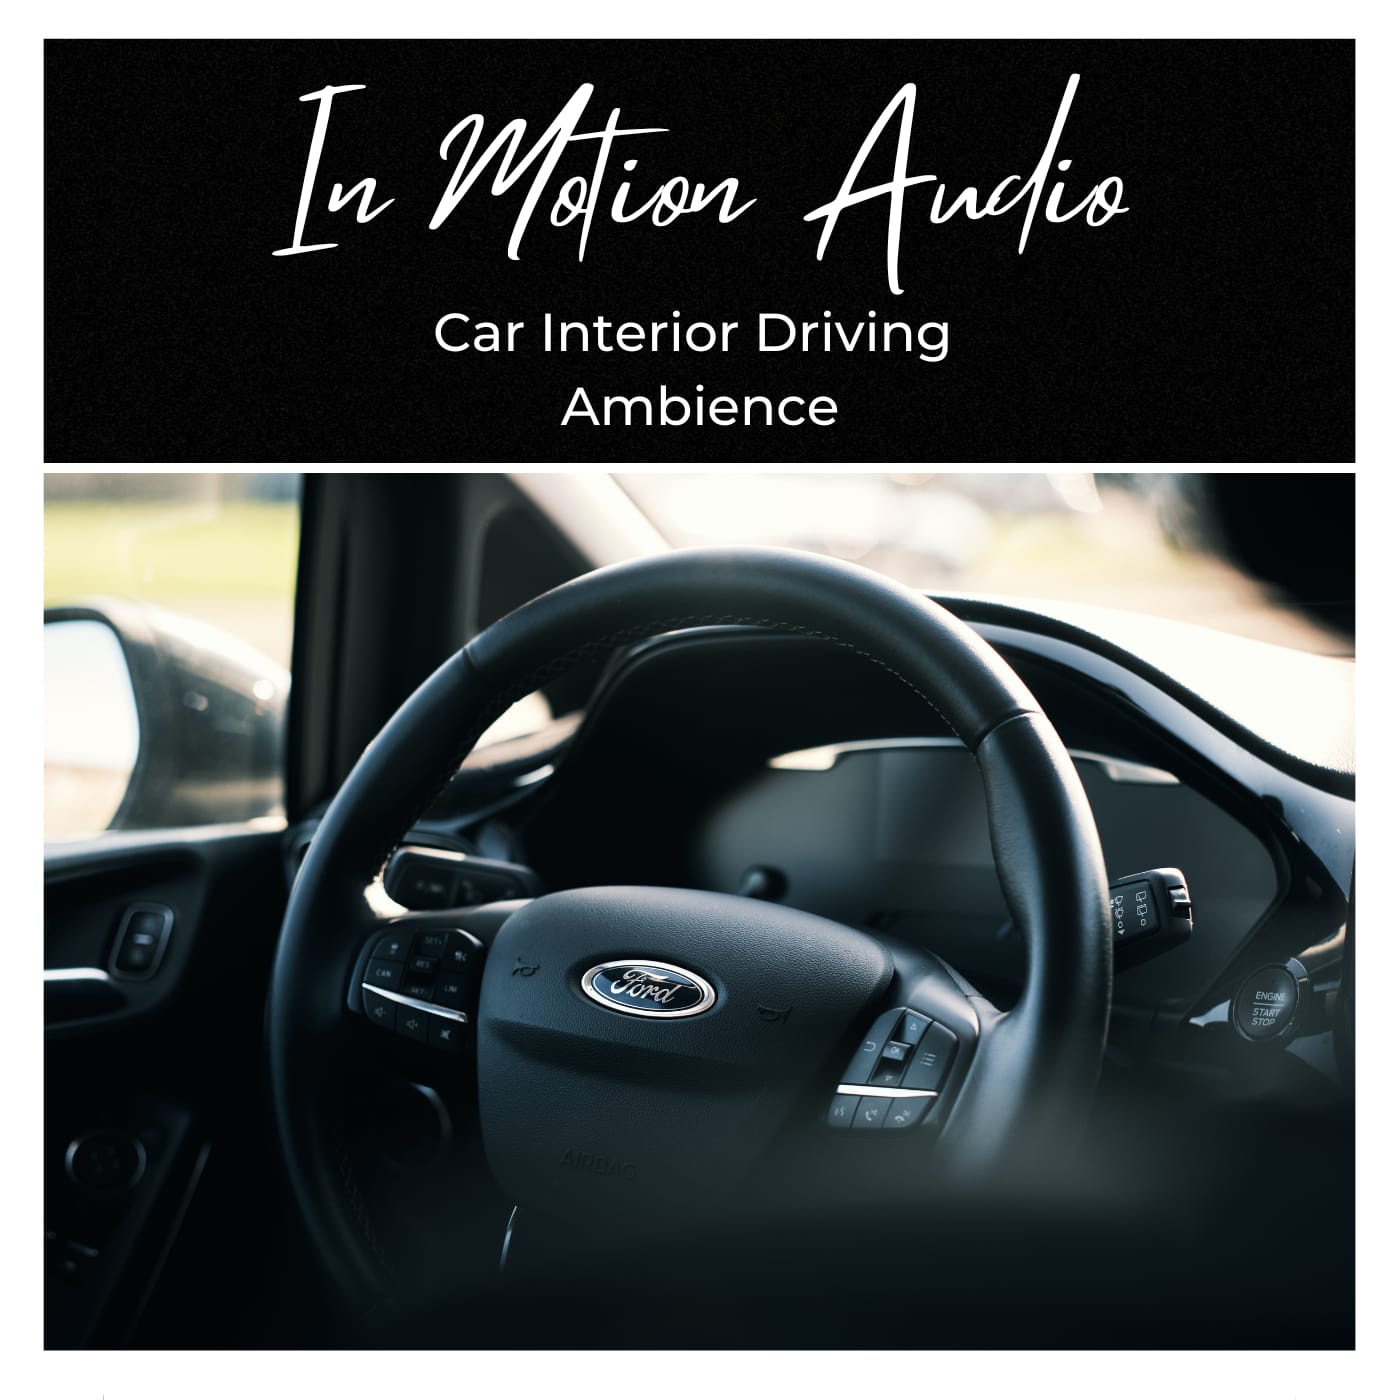 Car Interior Driving Ambience